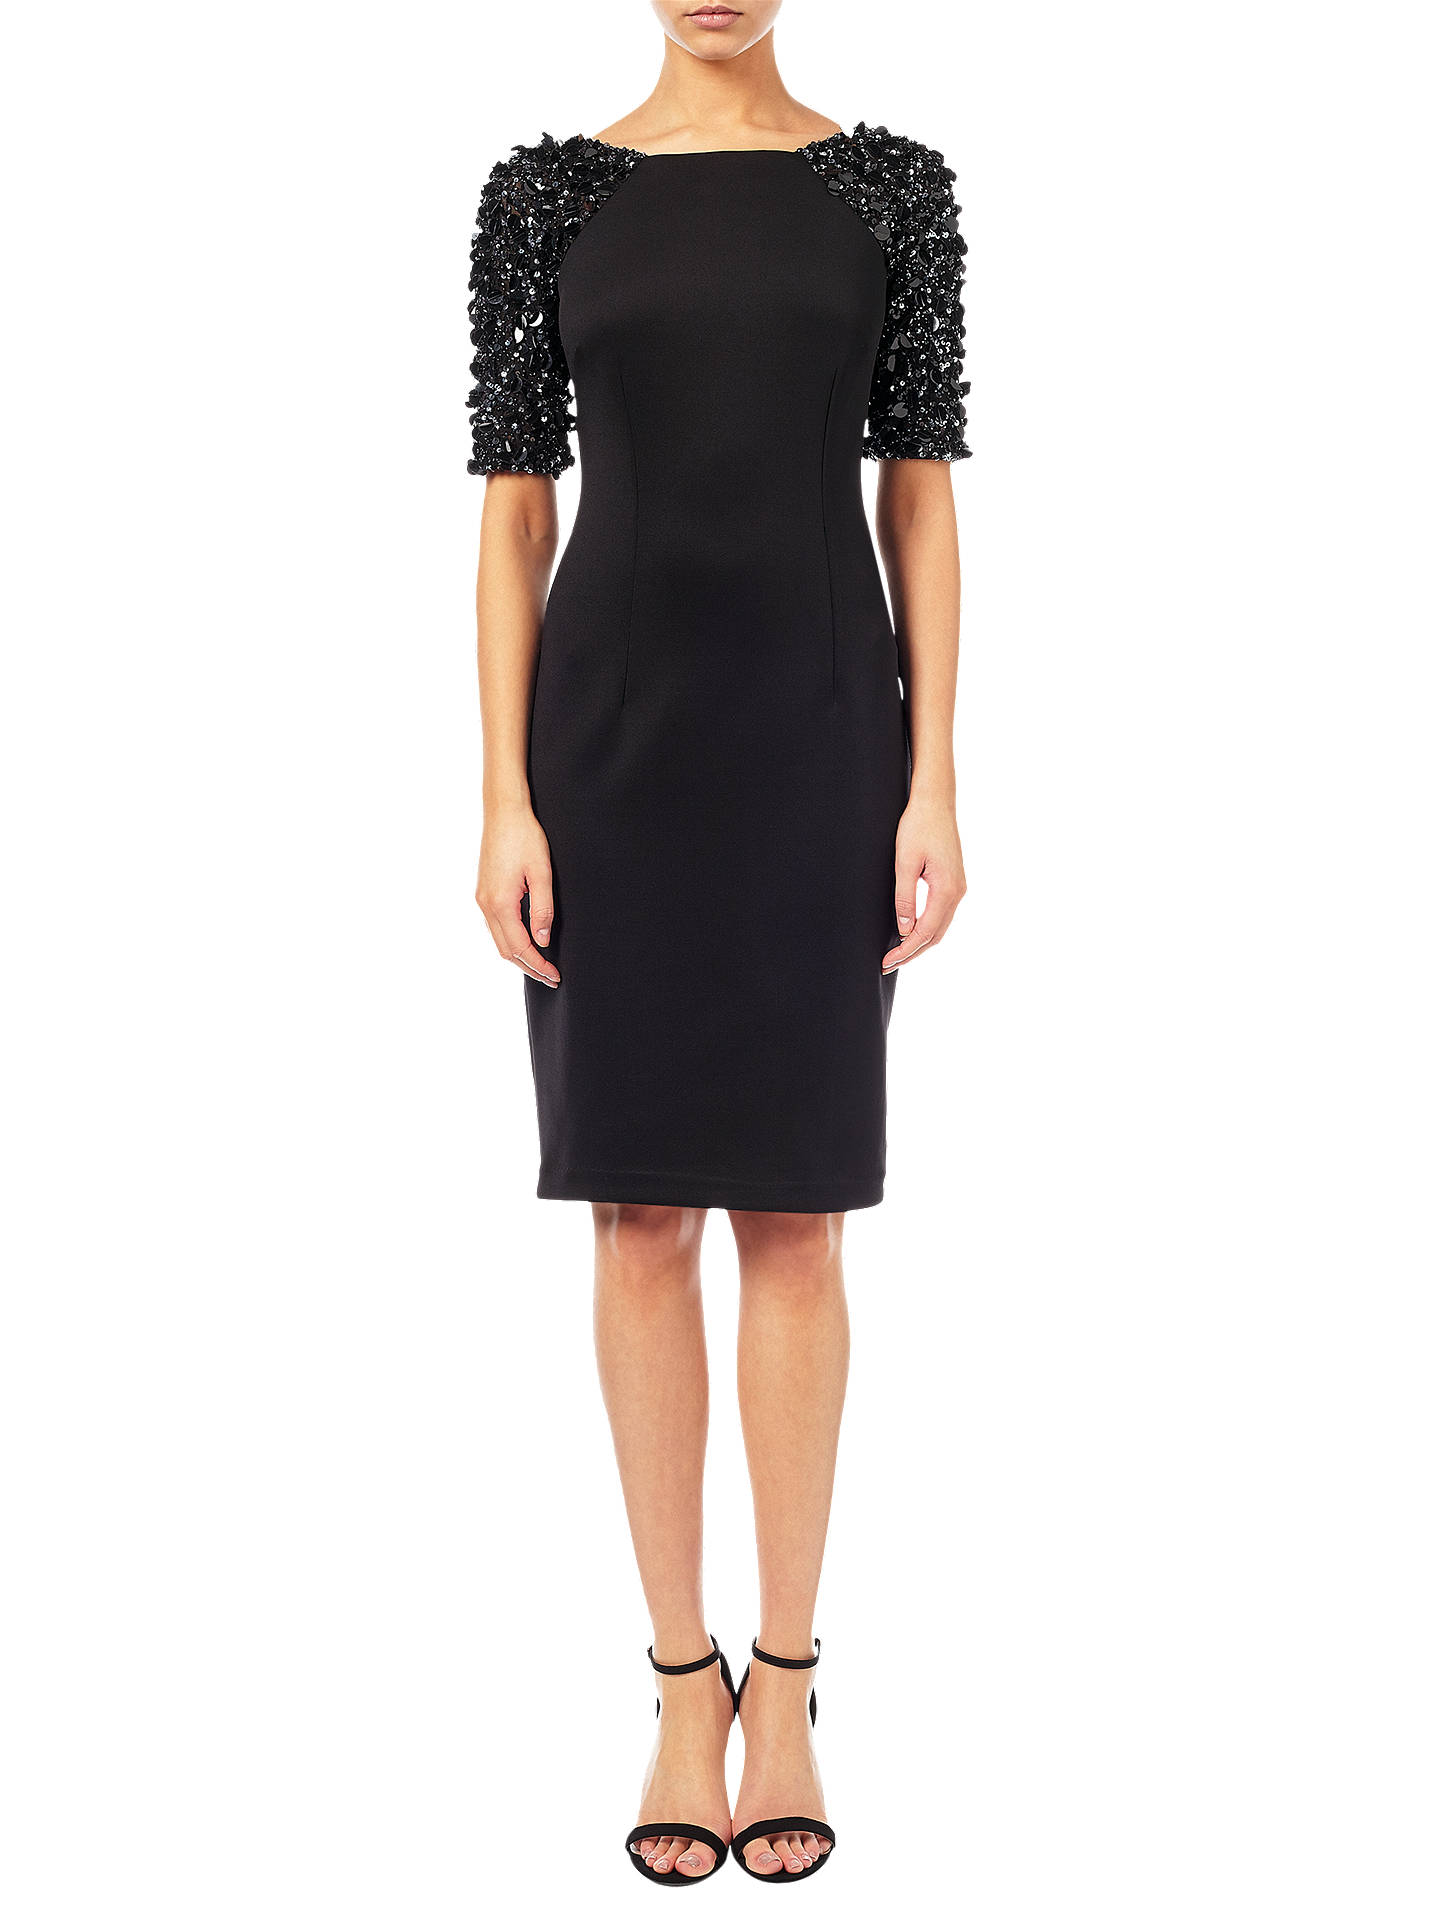 Adrianna Papell Beaded Sleeve Short Dress, Black at John Lewis & Partners